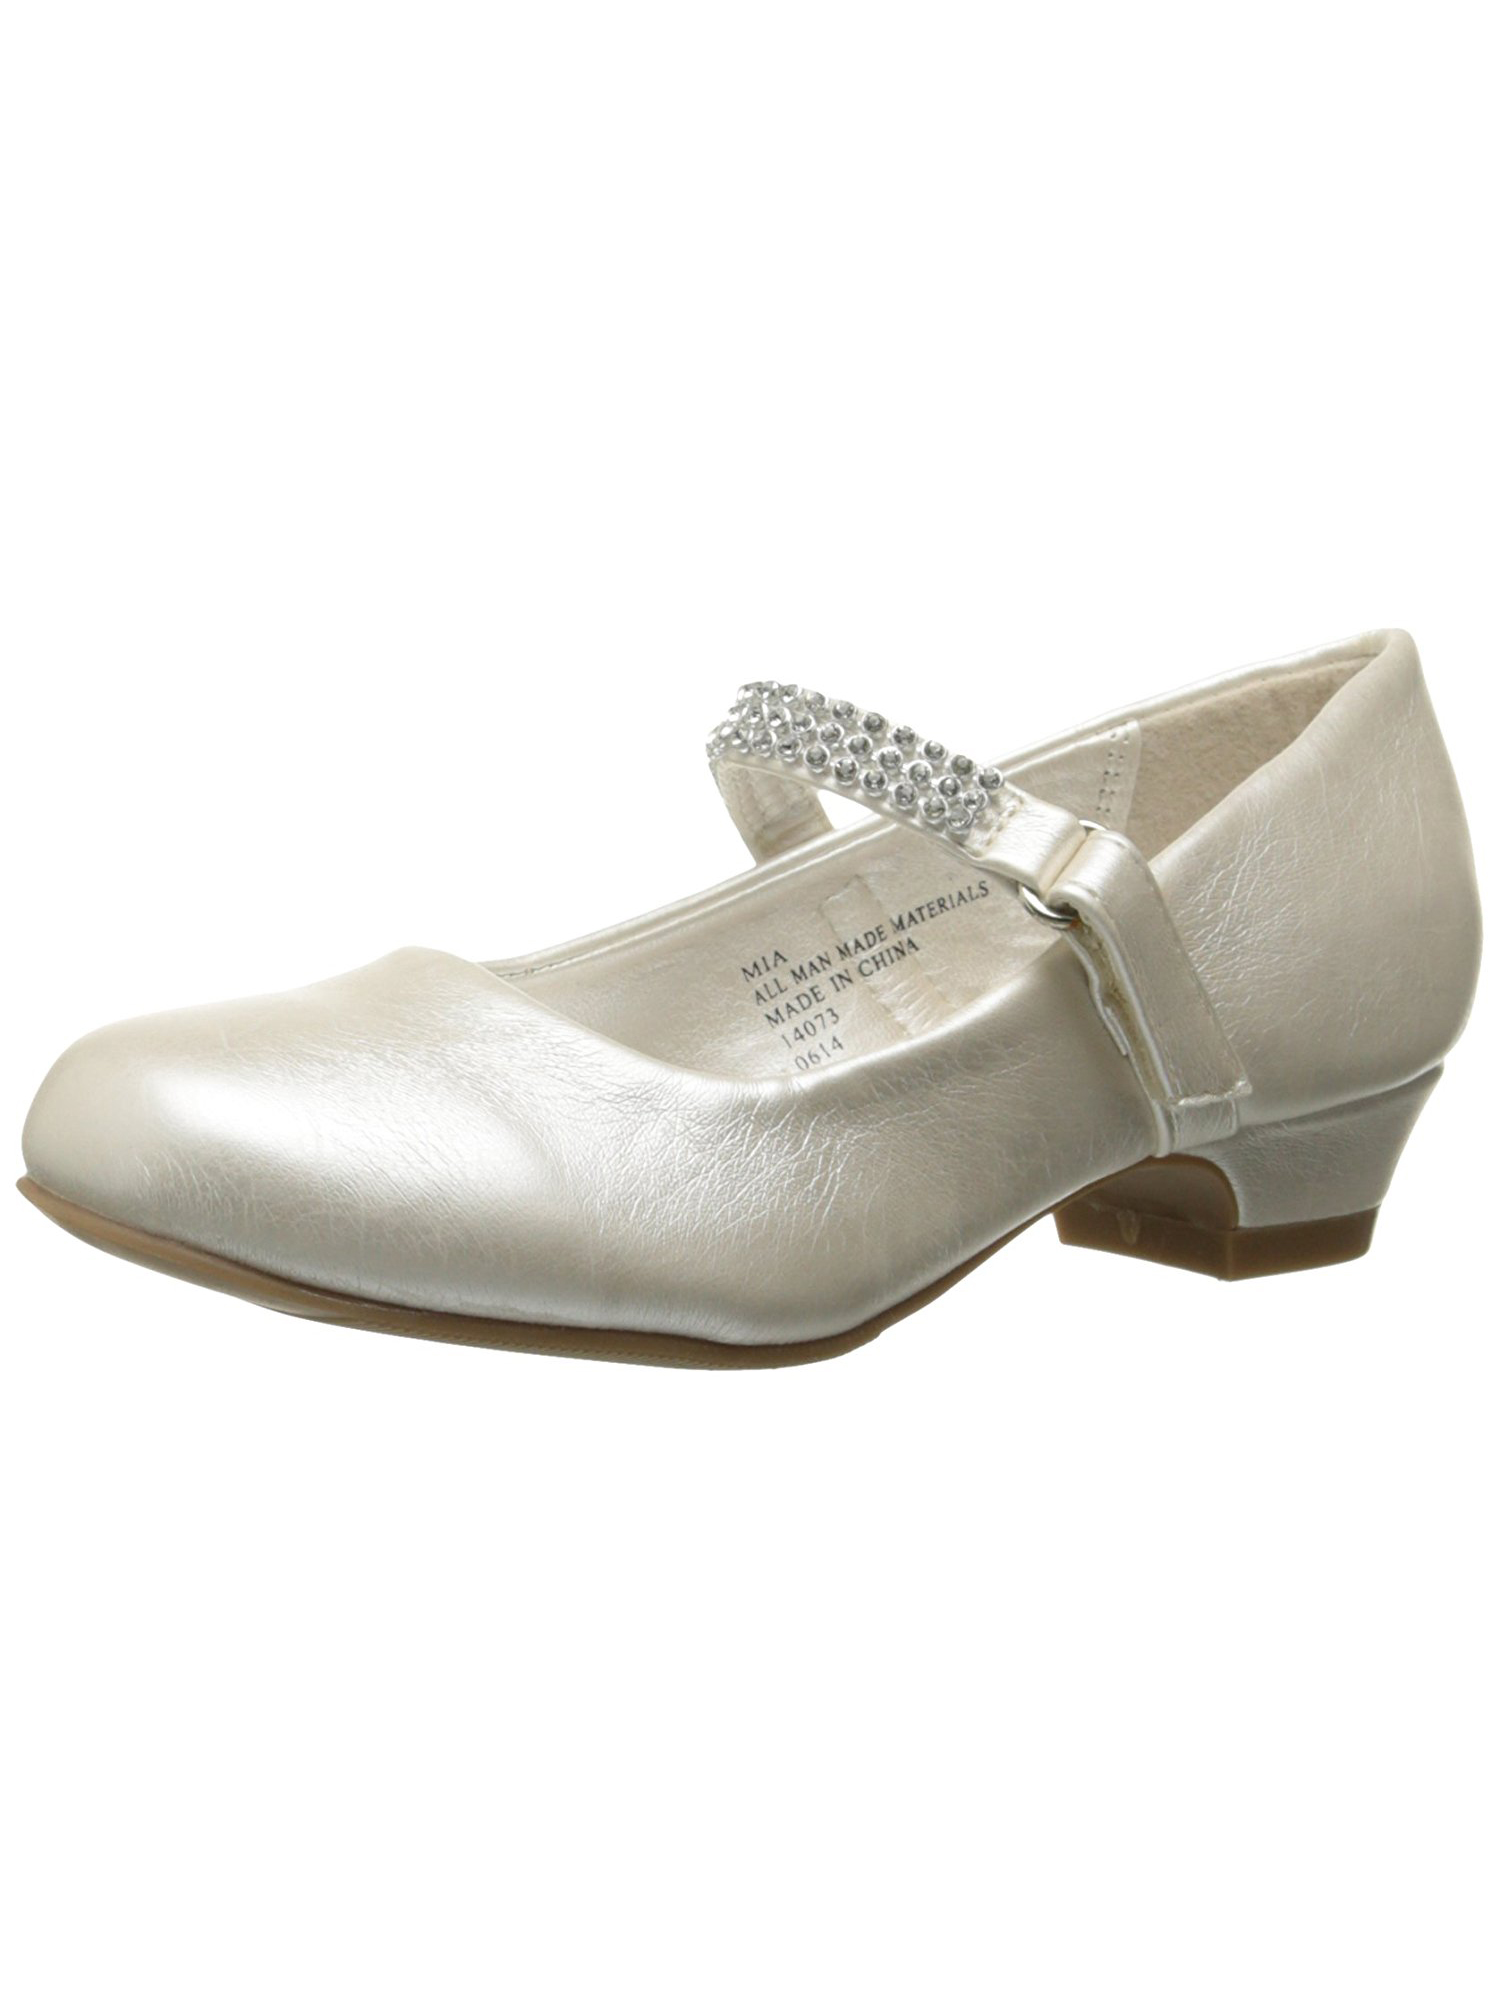 Girls Low Heel Dress Shoe With Rhinestone Strap (13, White)